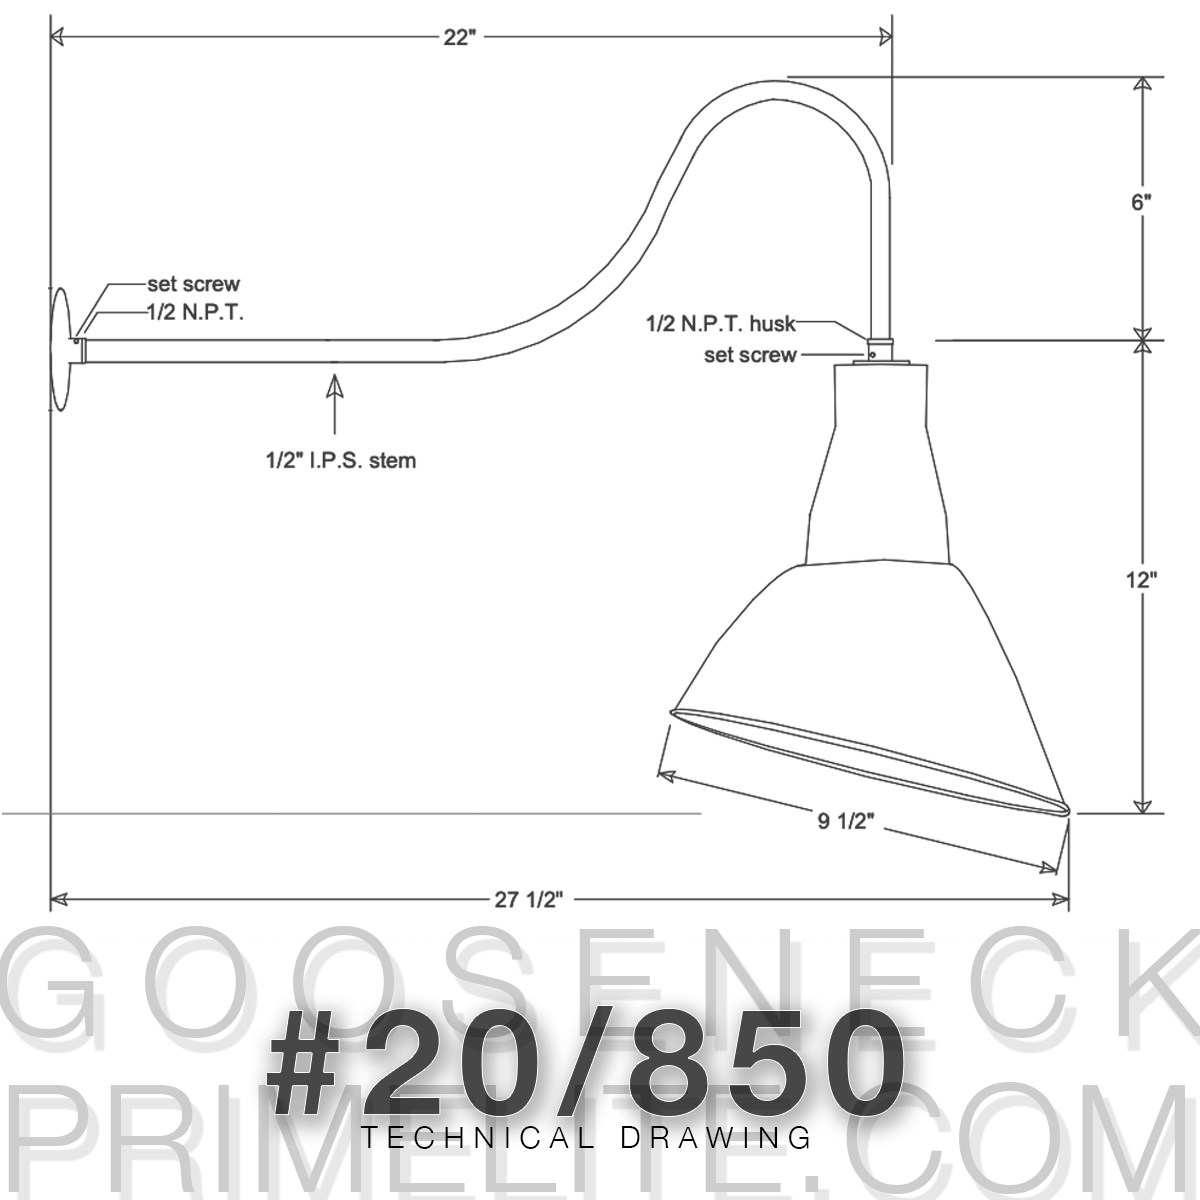 technical drawing - Gooseneck Light #20/850